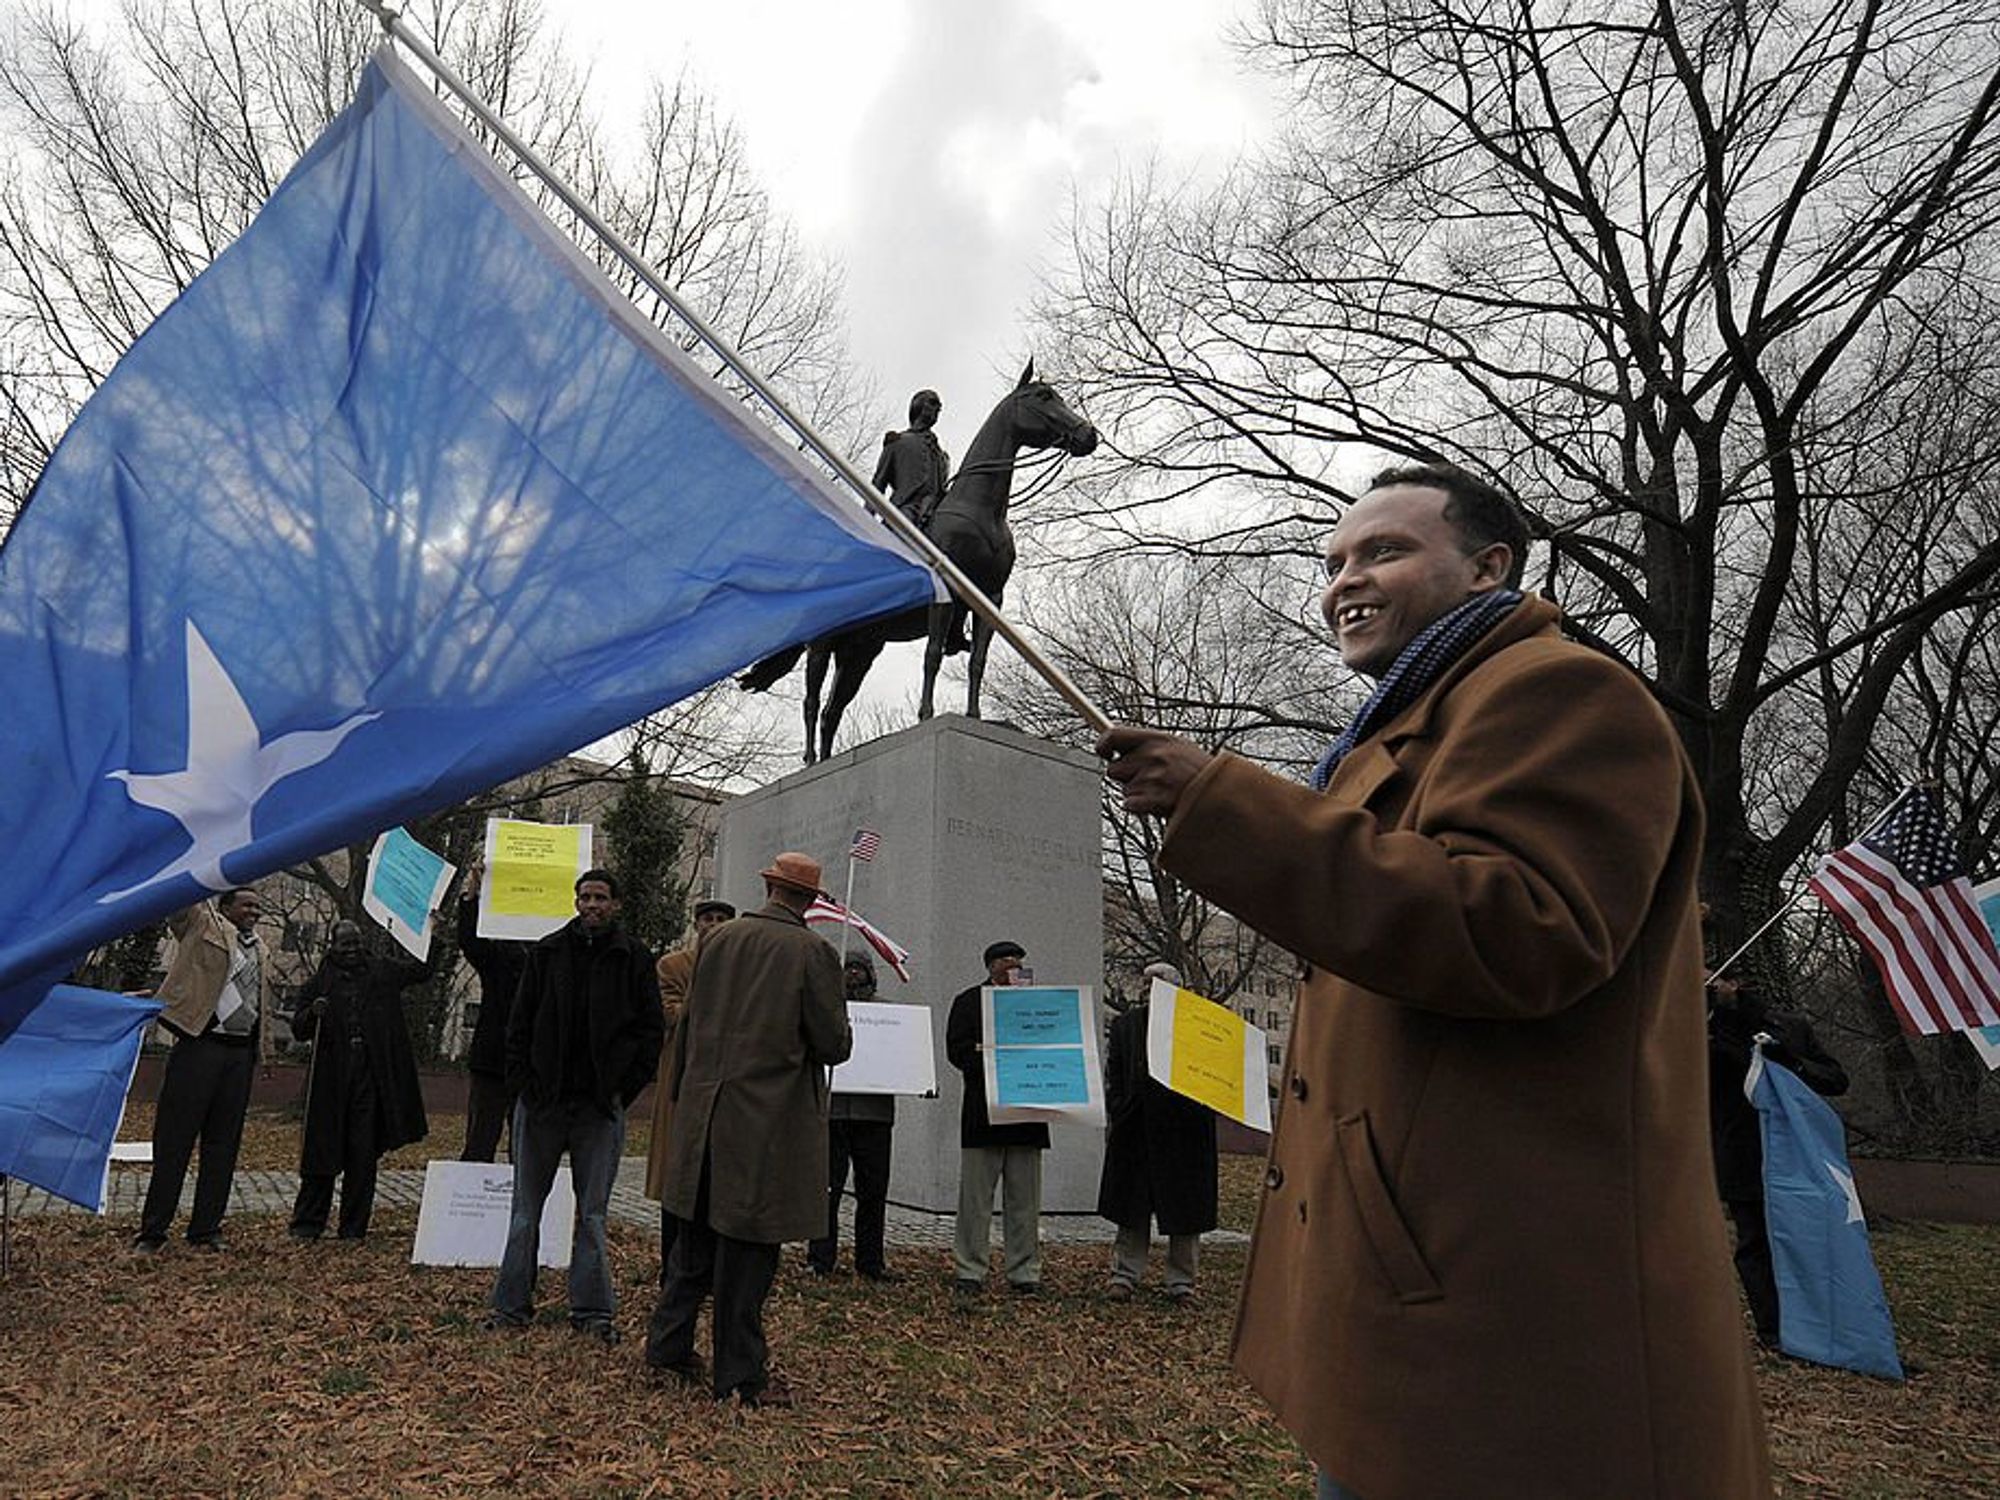 Somali protesters waving flag